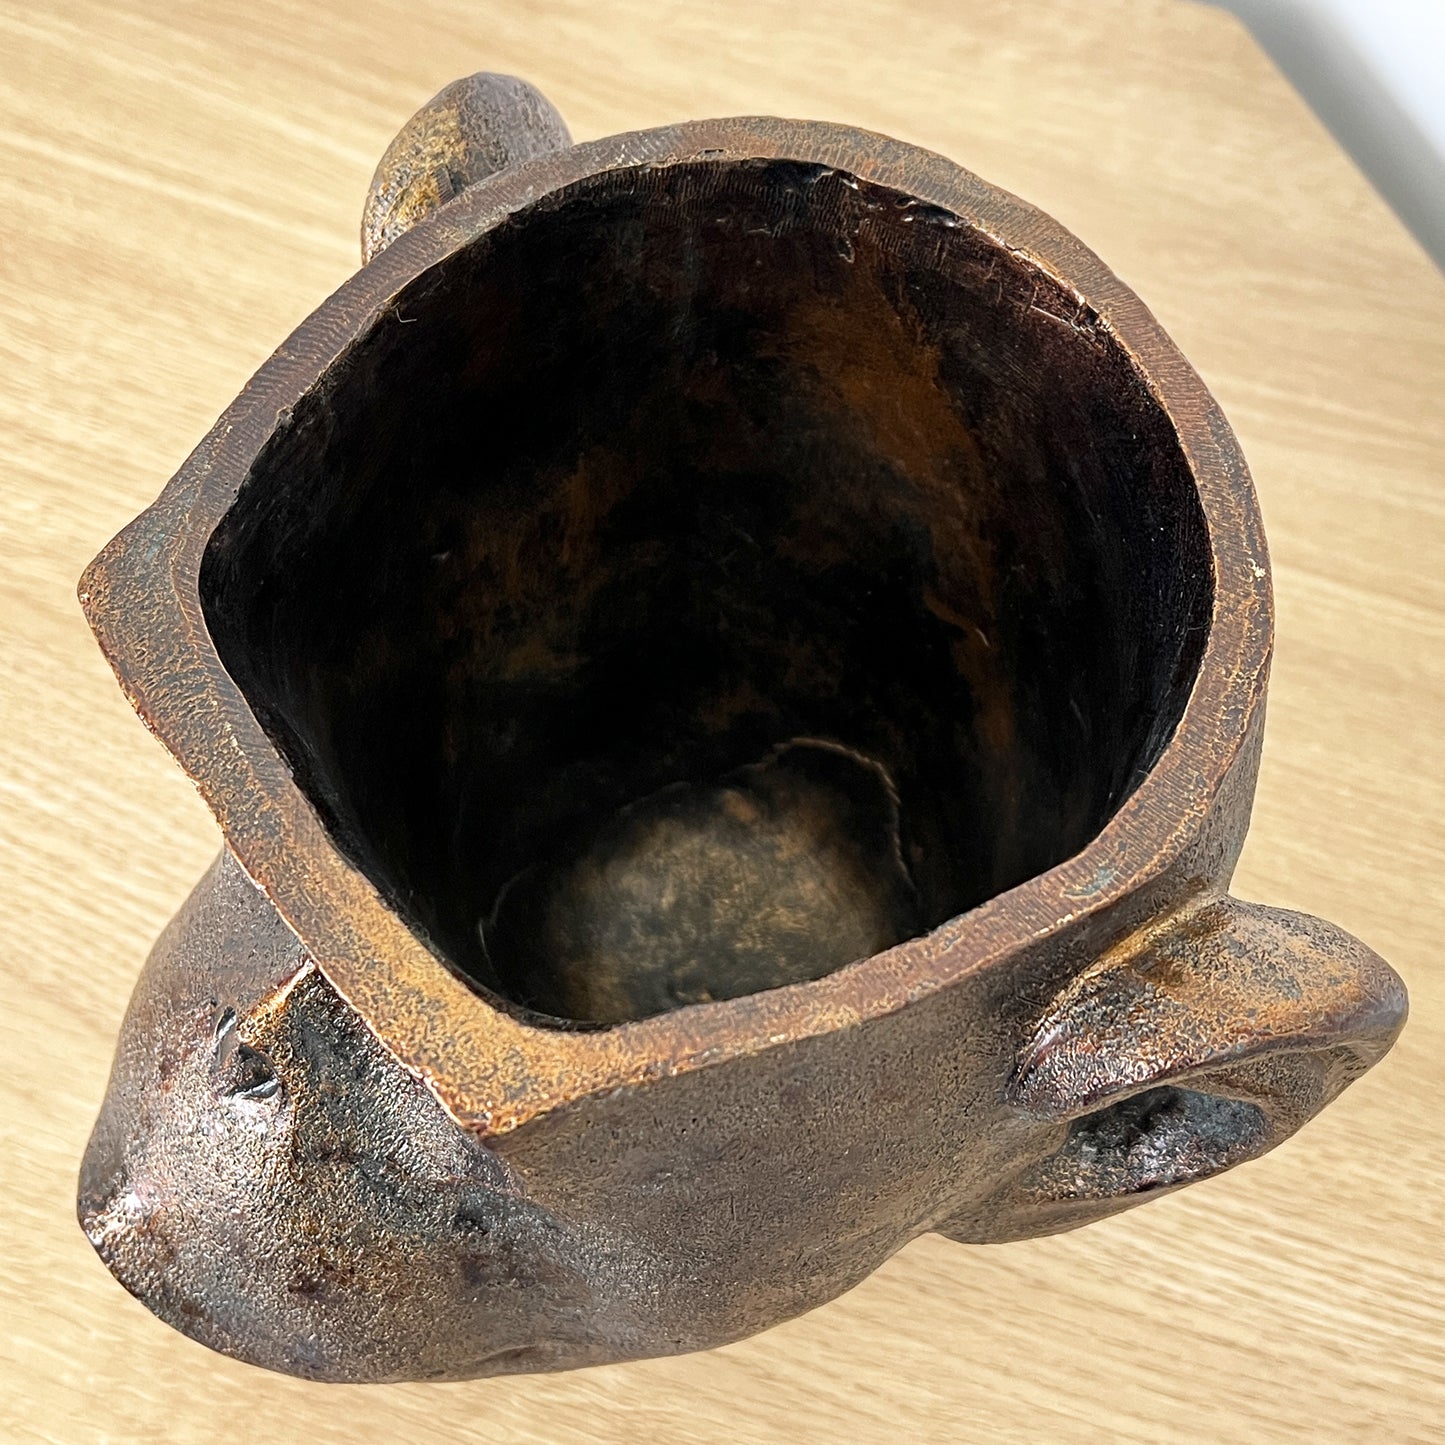 Decorative Monkey Head Plant Pot – Bronze